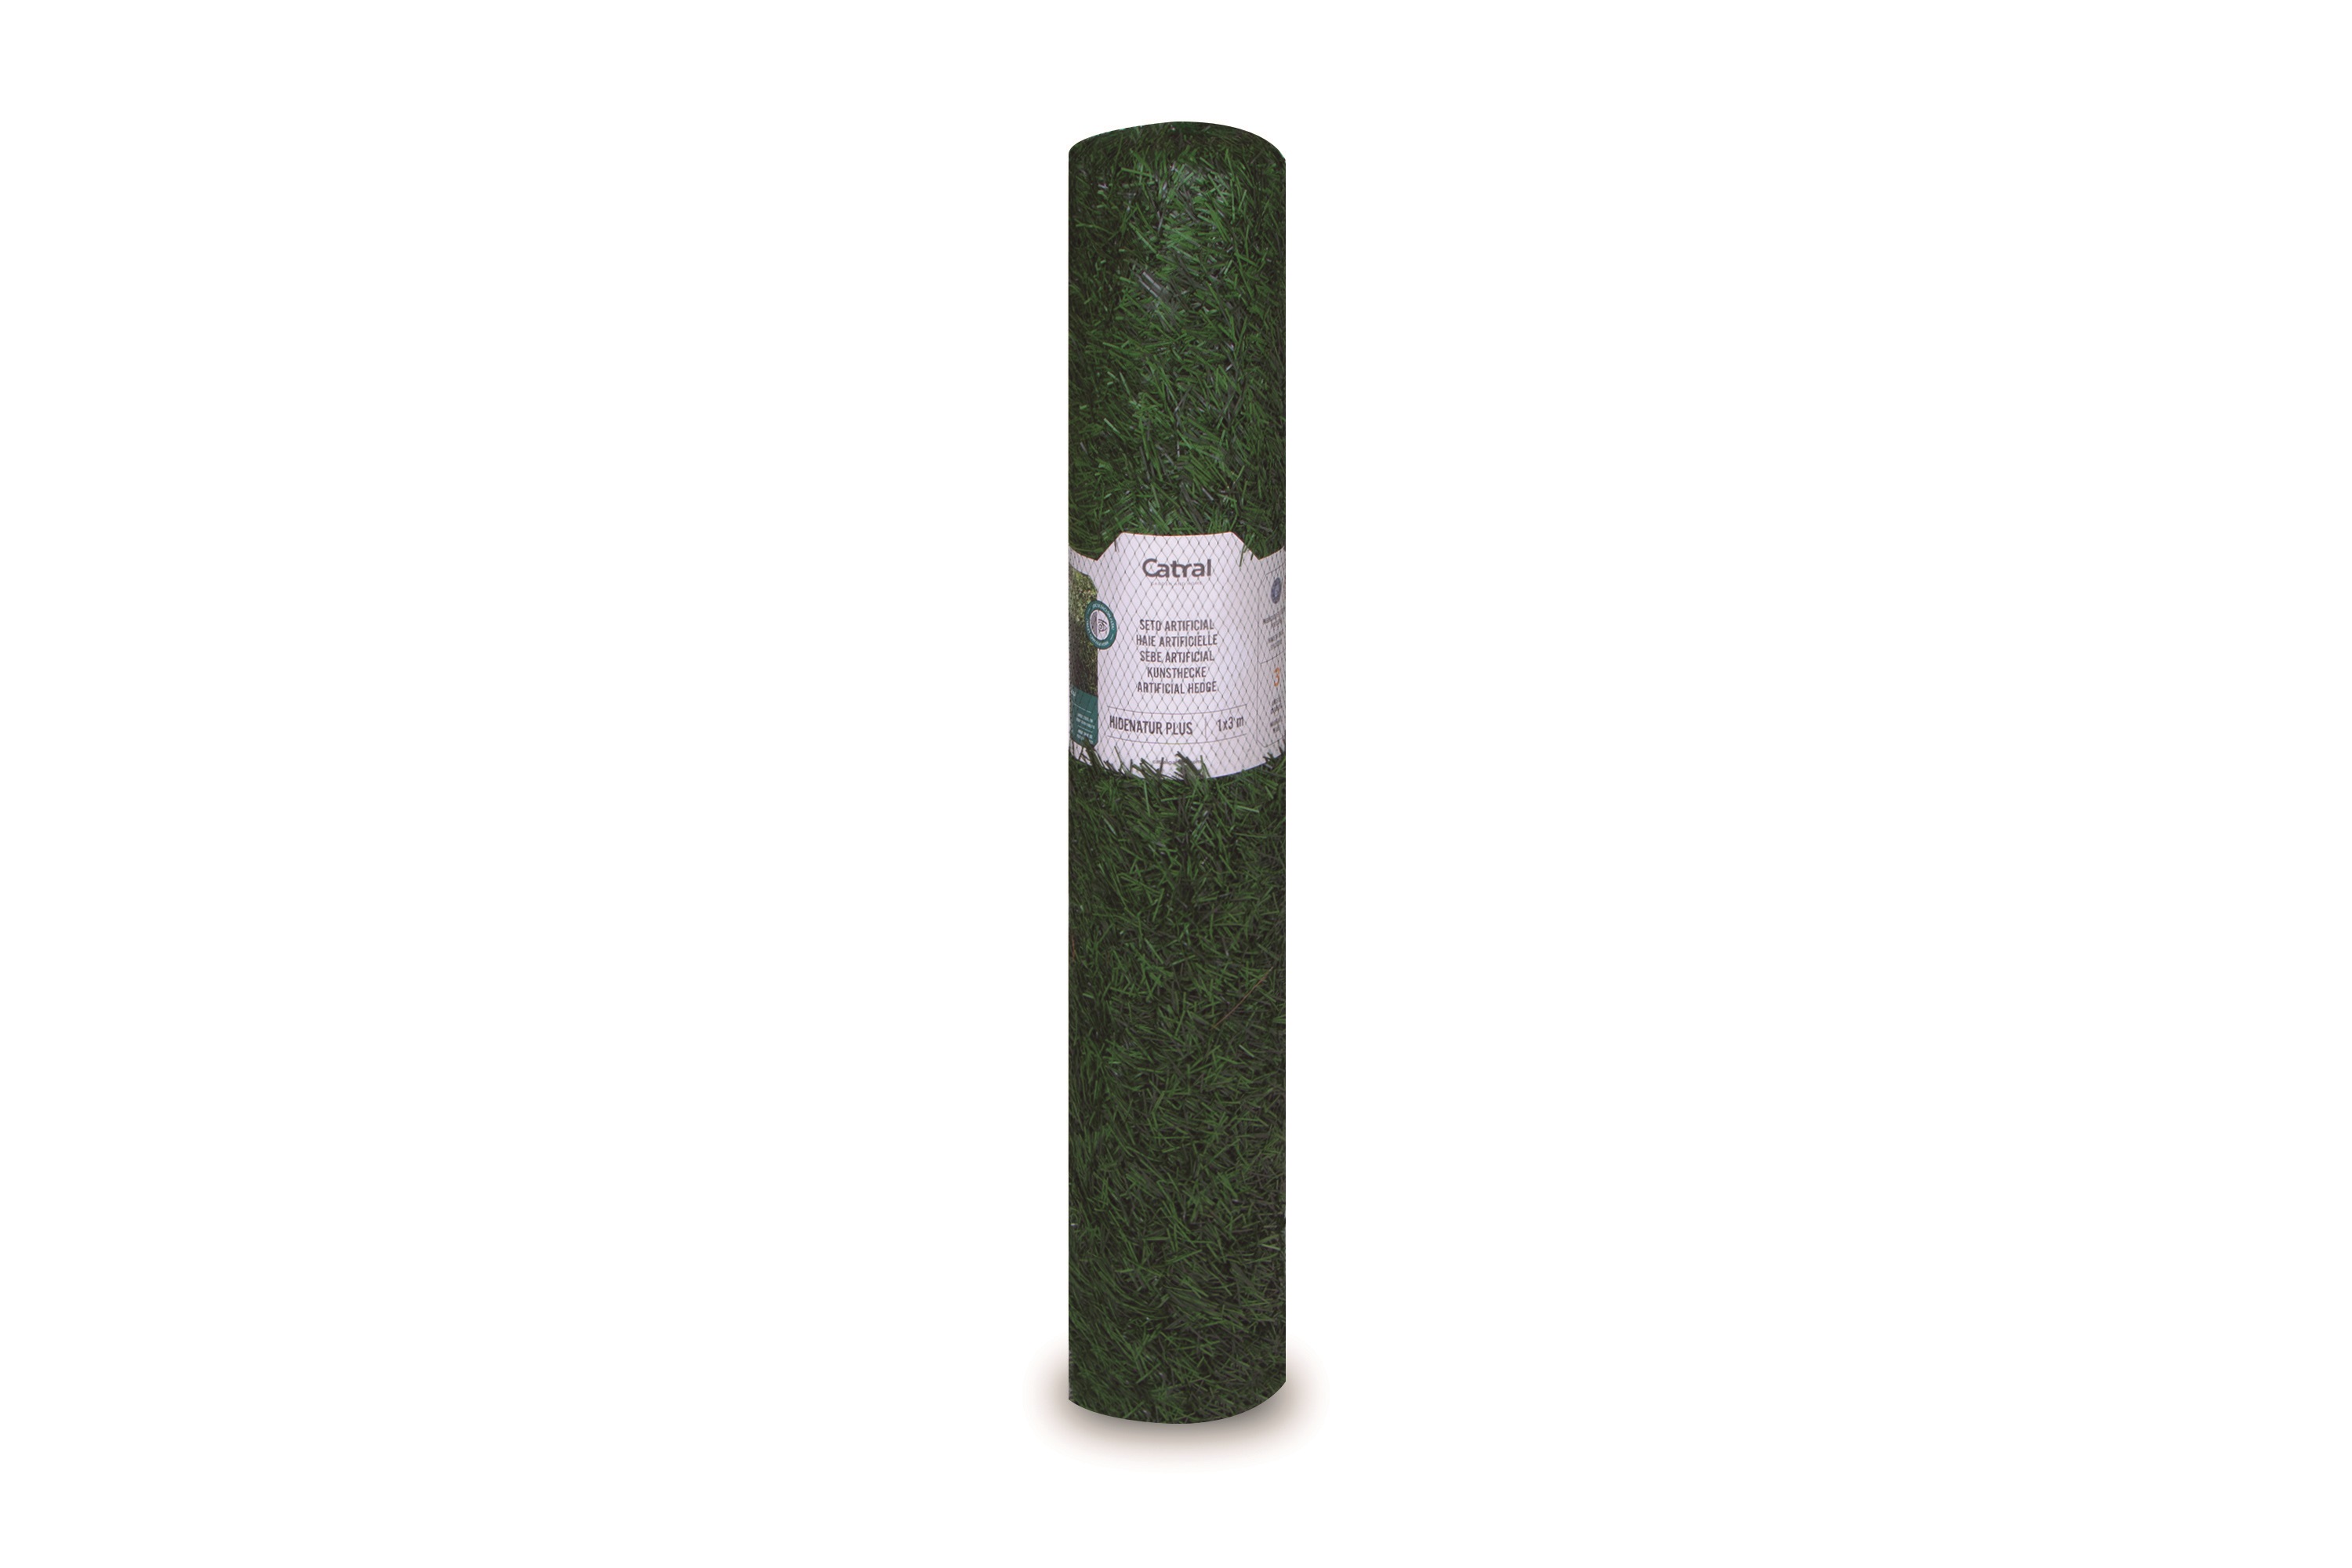 Artificial hedge Hidenatur Plus 2x3 m green